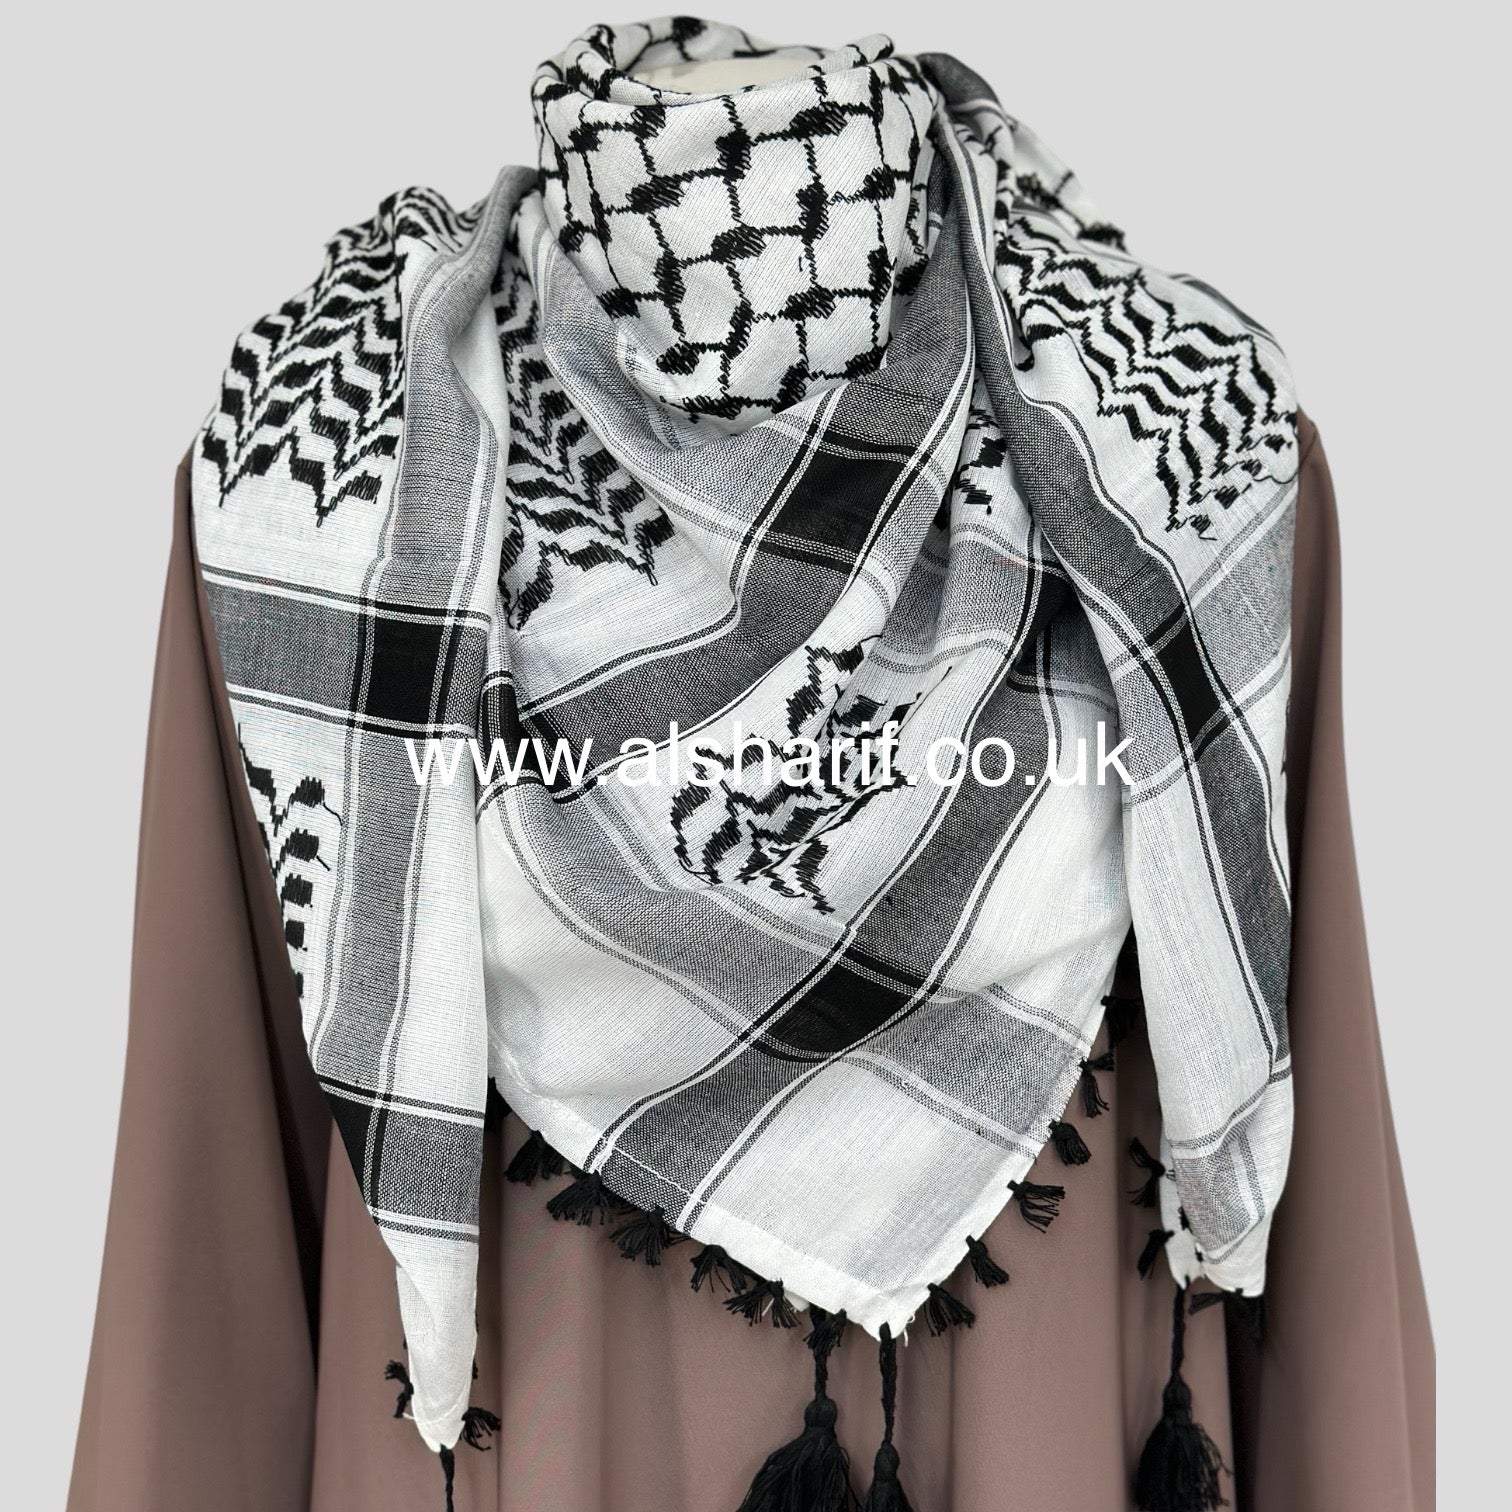 White & Black Palestinian Keffiyeh Scarf - MS12